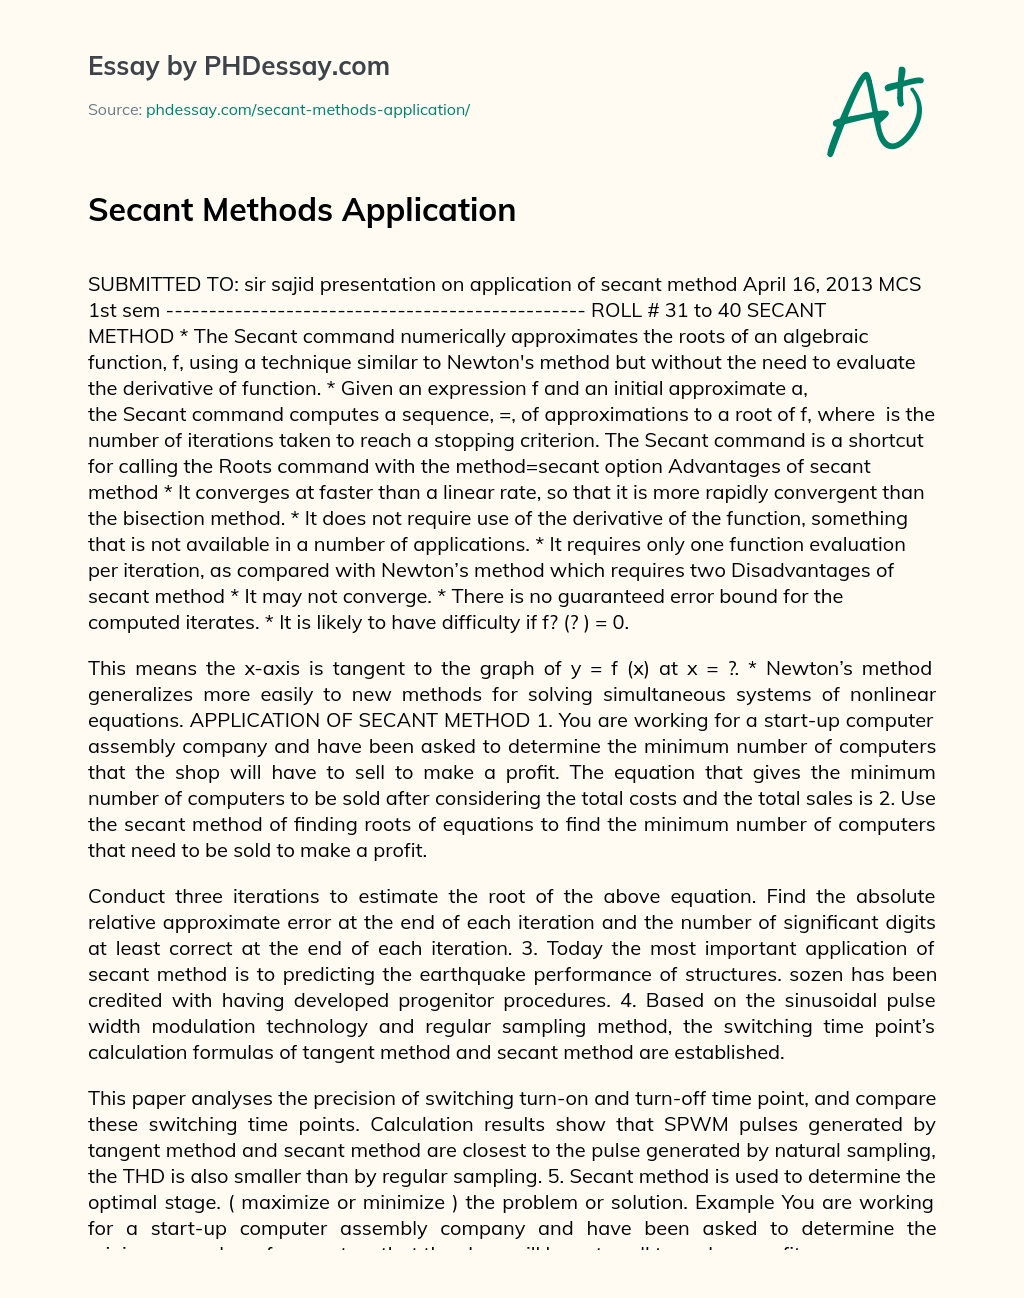 Secant Methods Application essay